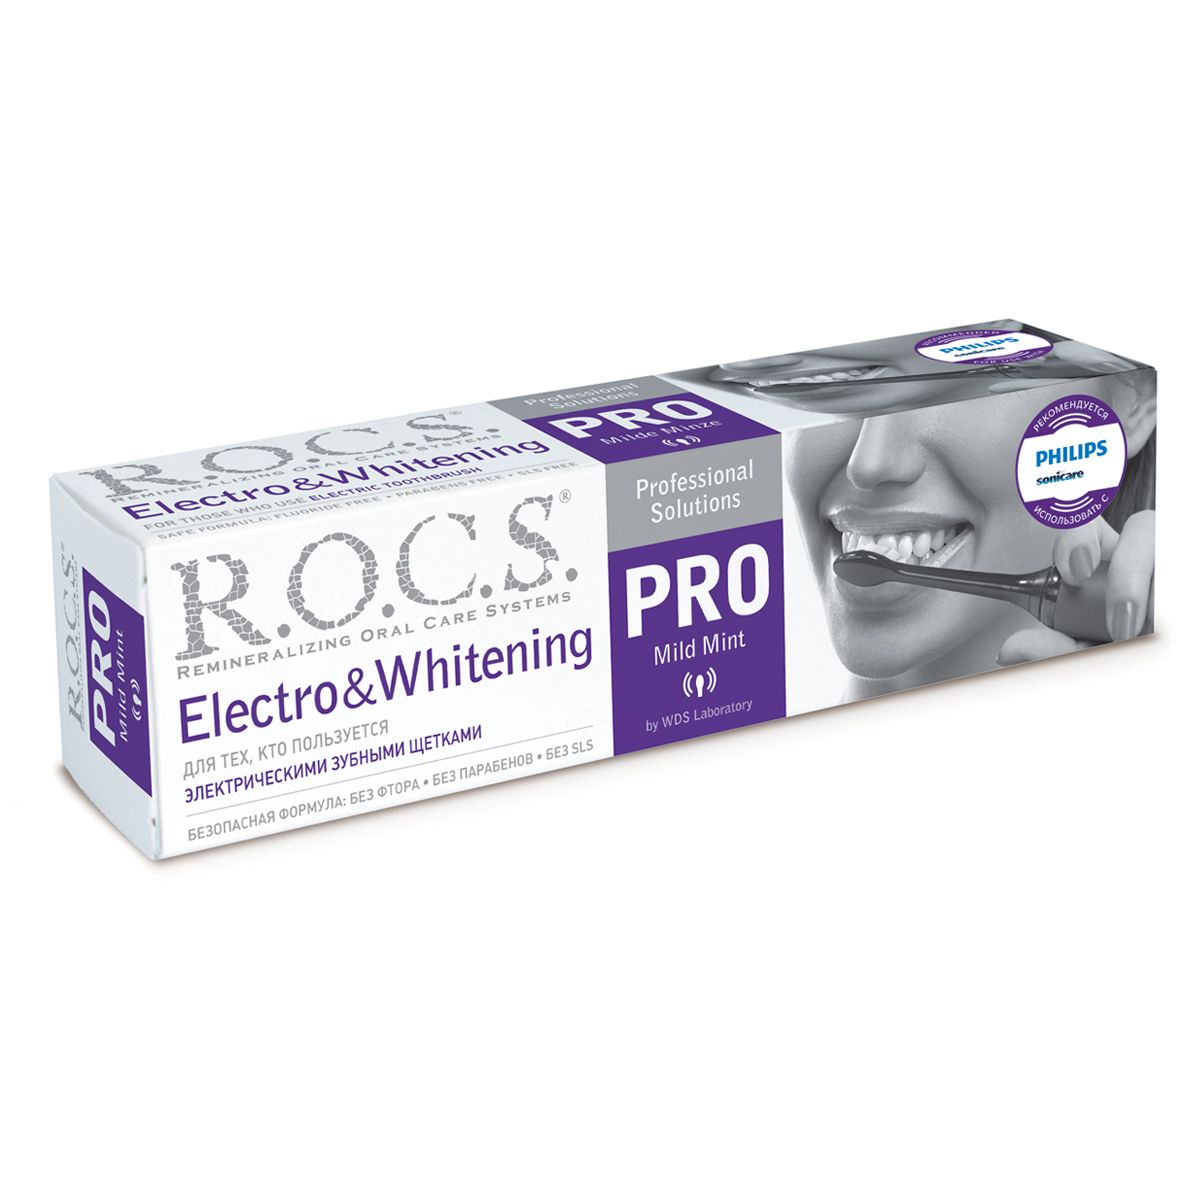 R.O.C.S. PRO Зубная паста Electro&Whitening Mild Mint, 135гр